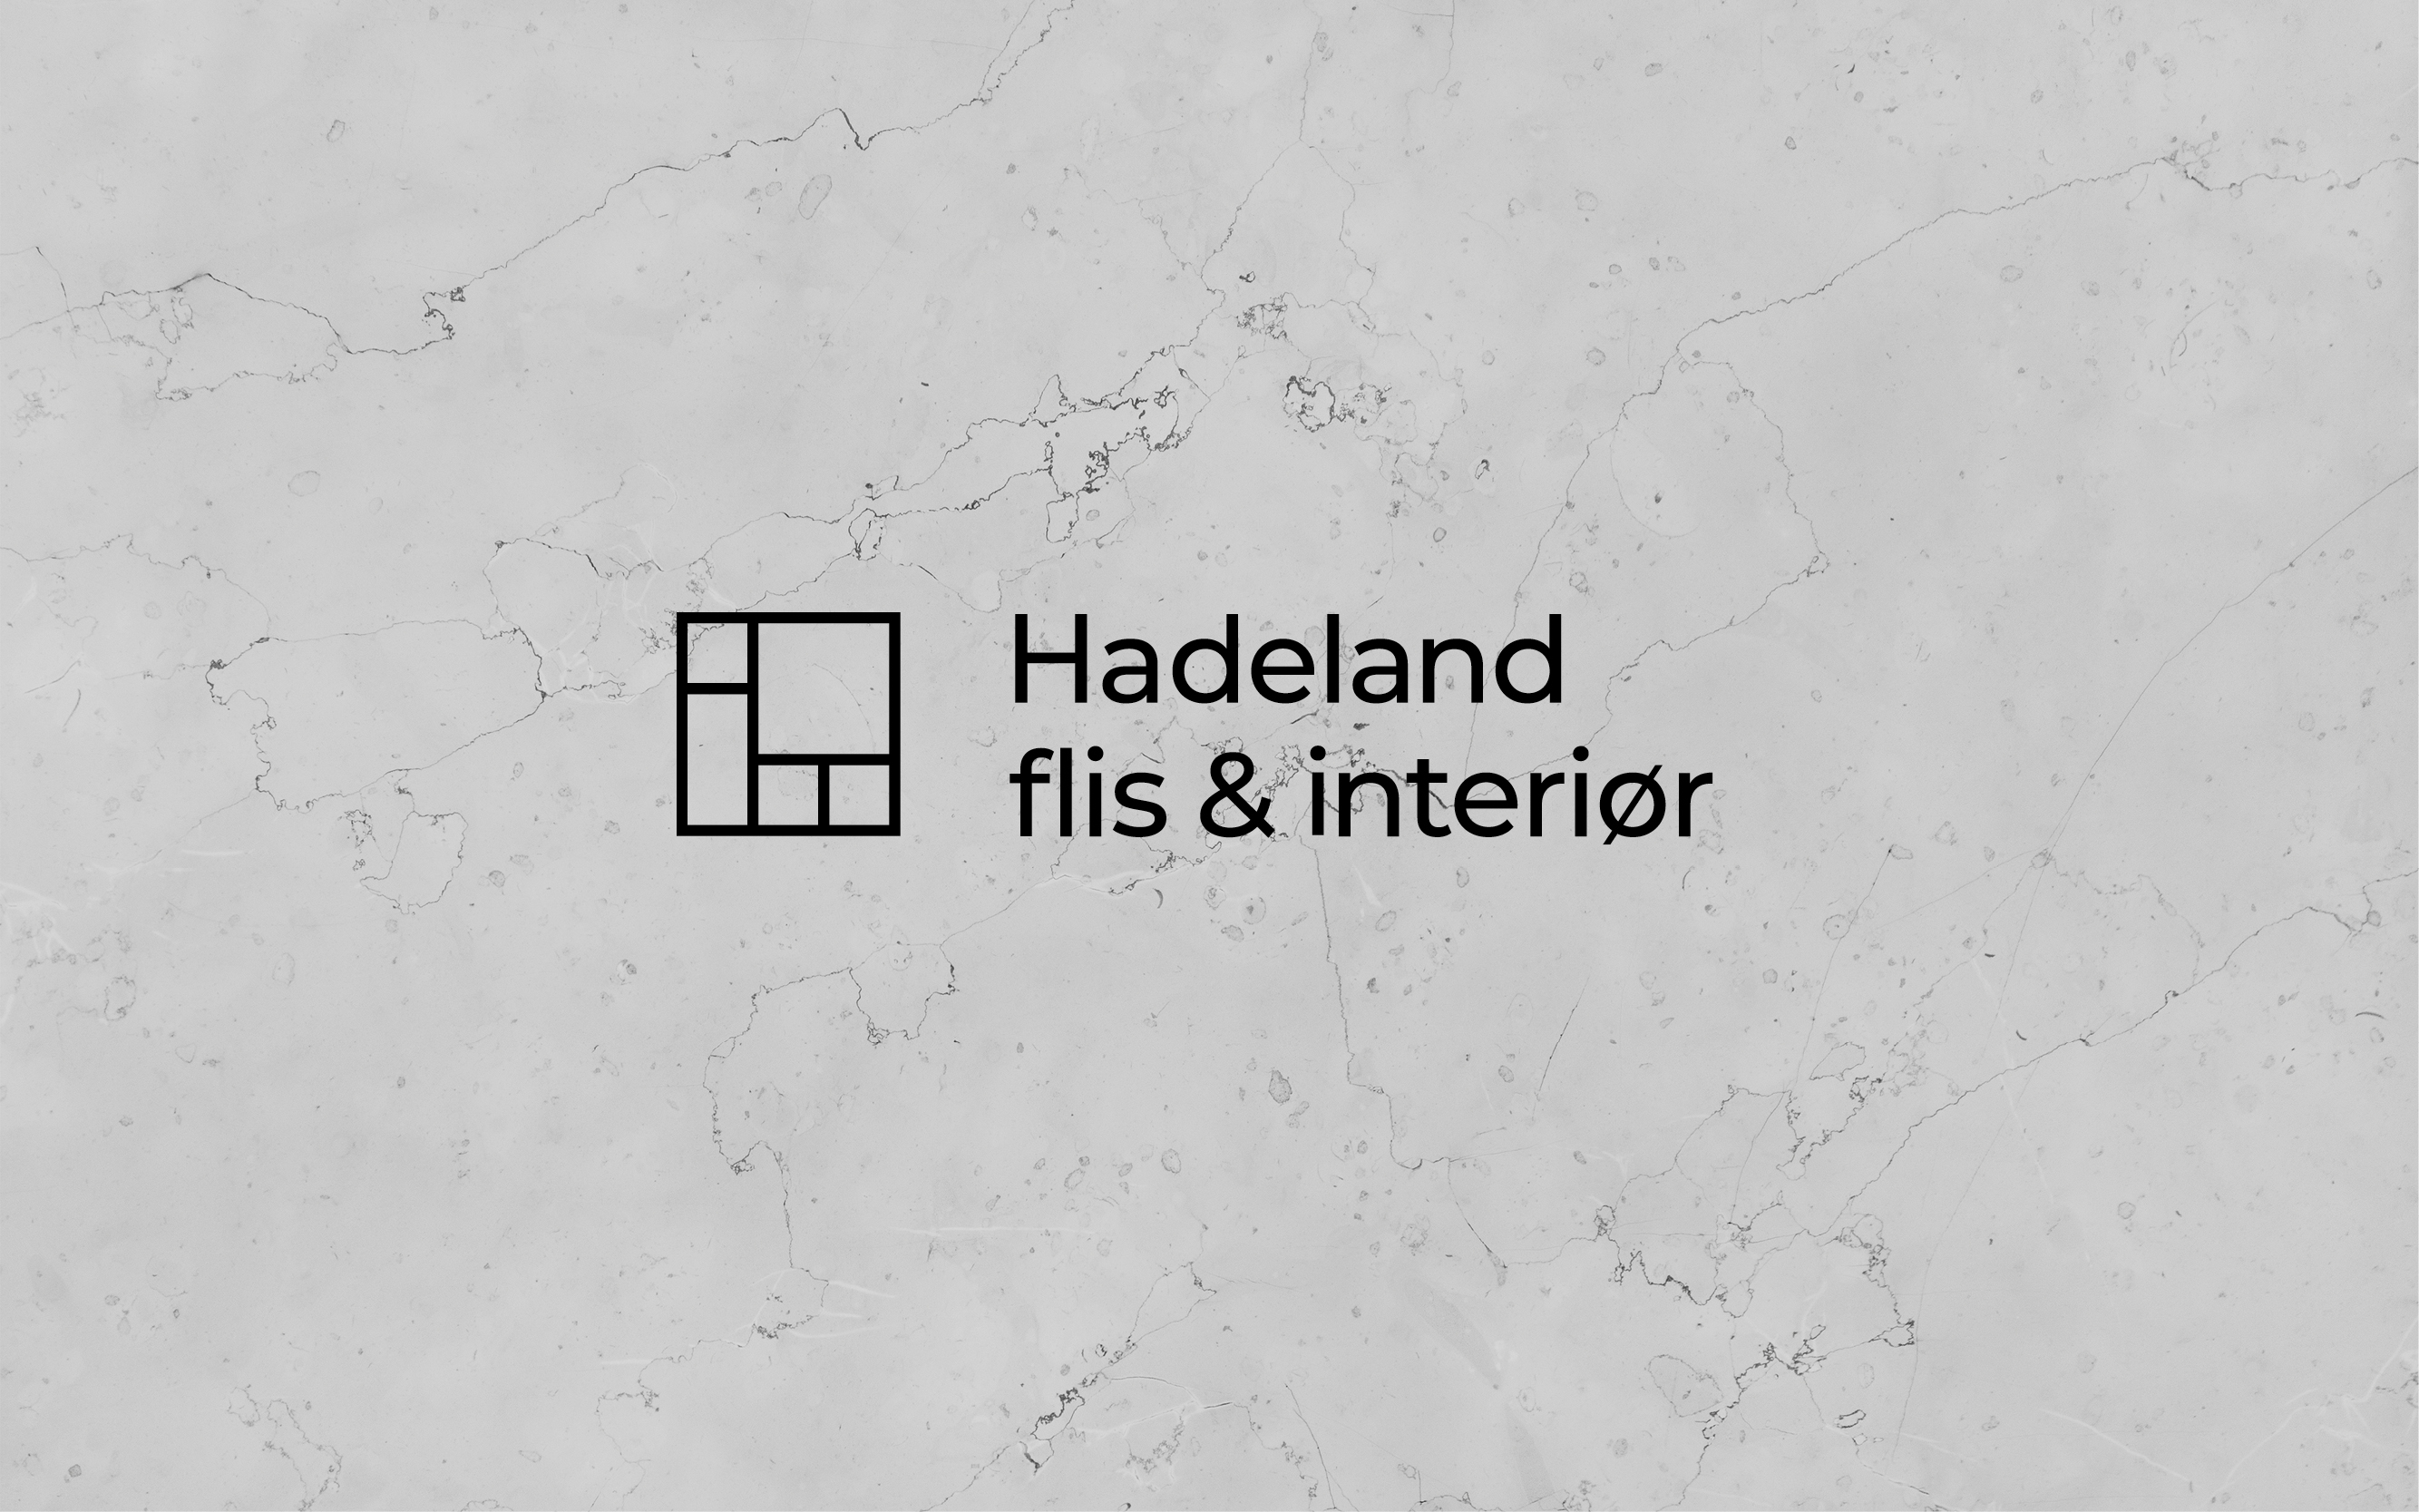 Hadelandflis_logo